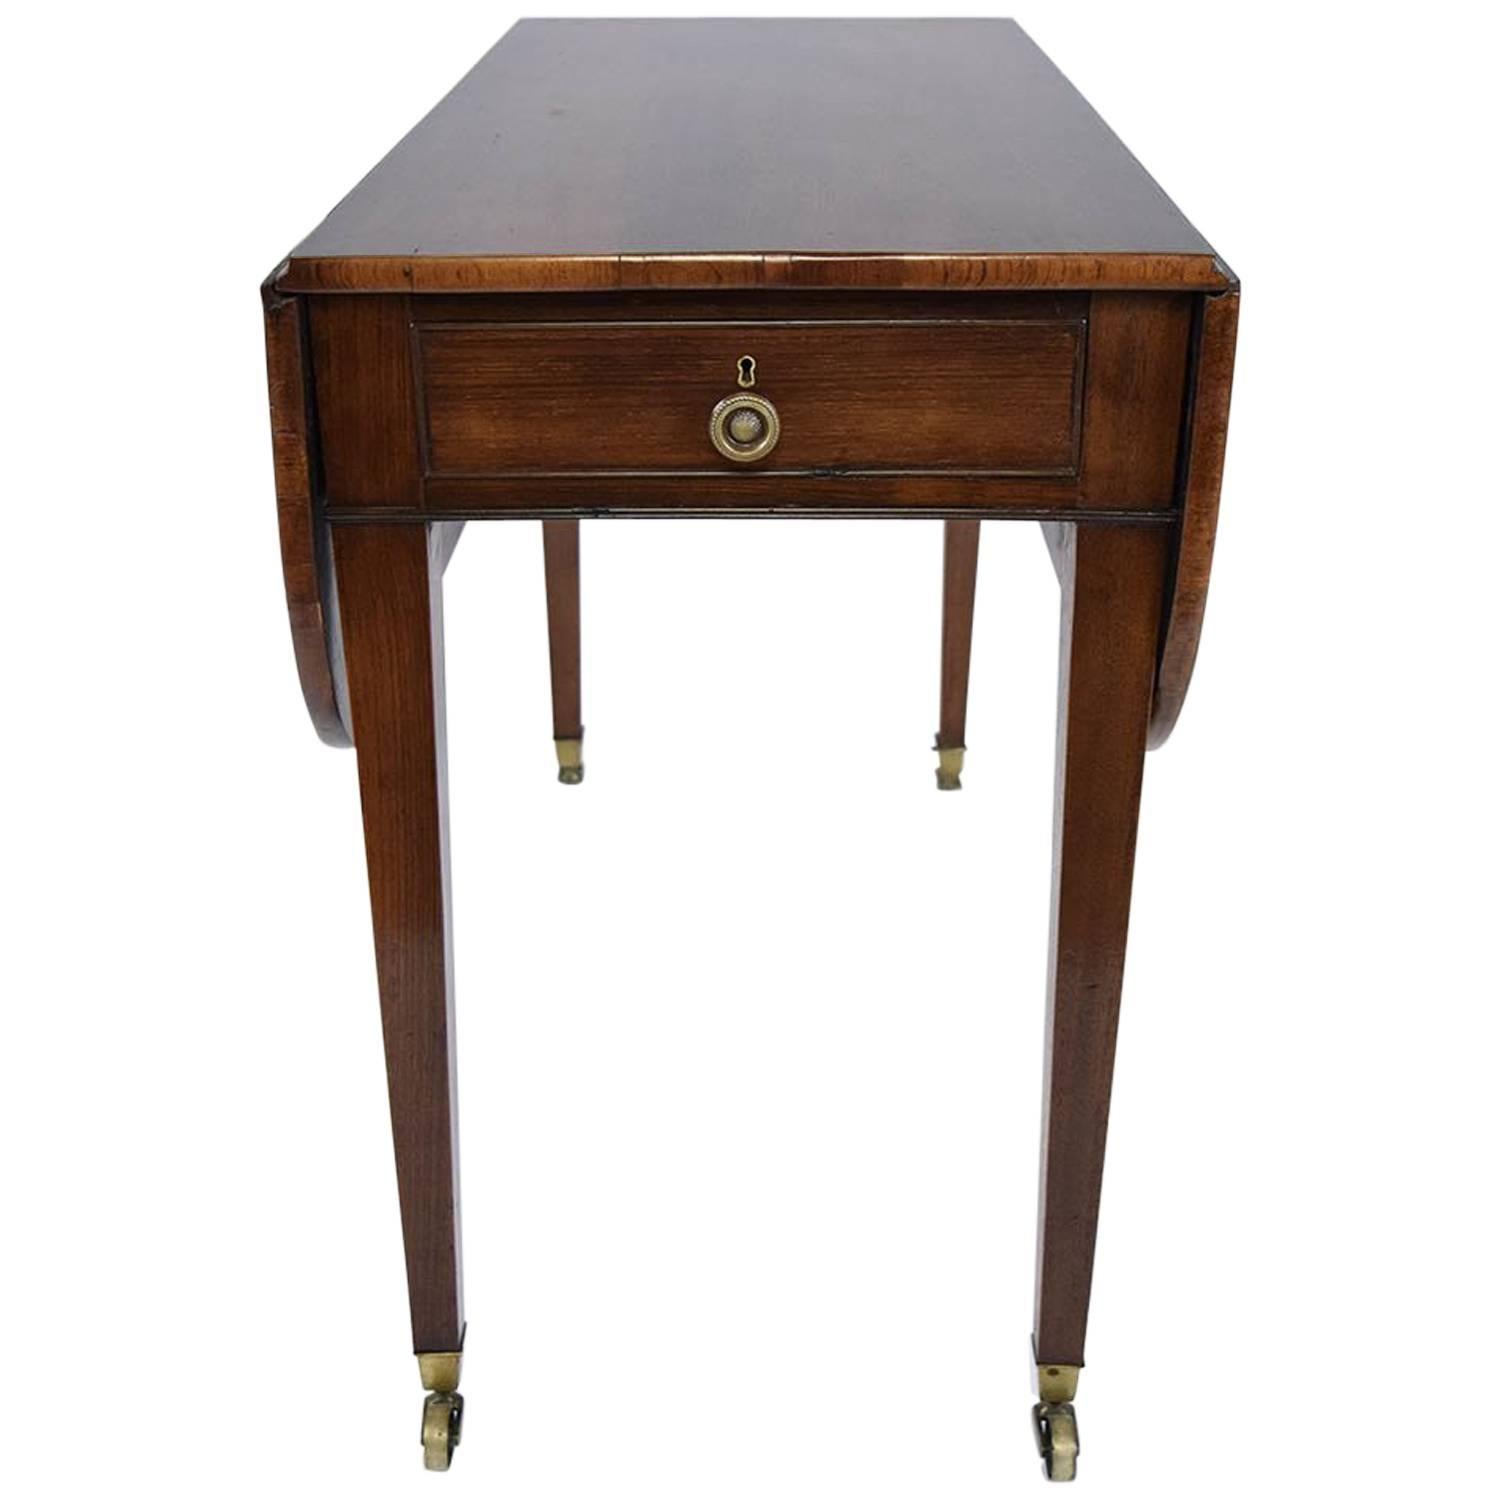 19th Century English Pembroke-Style Table